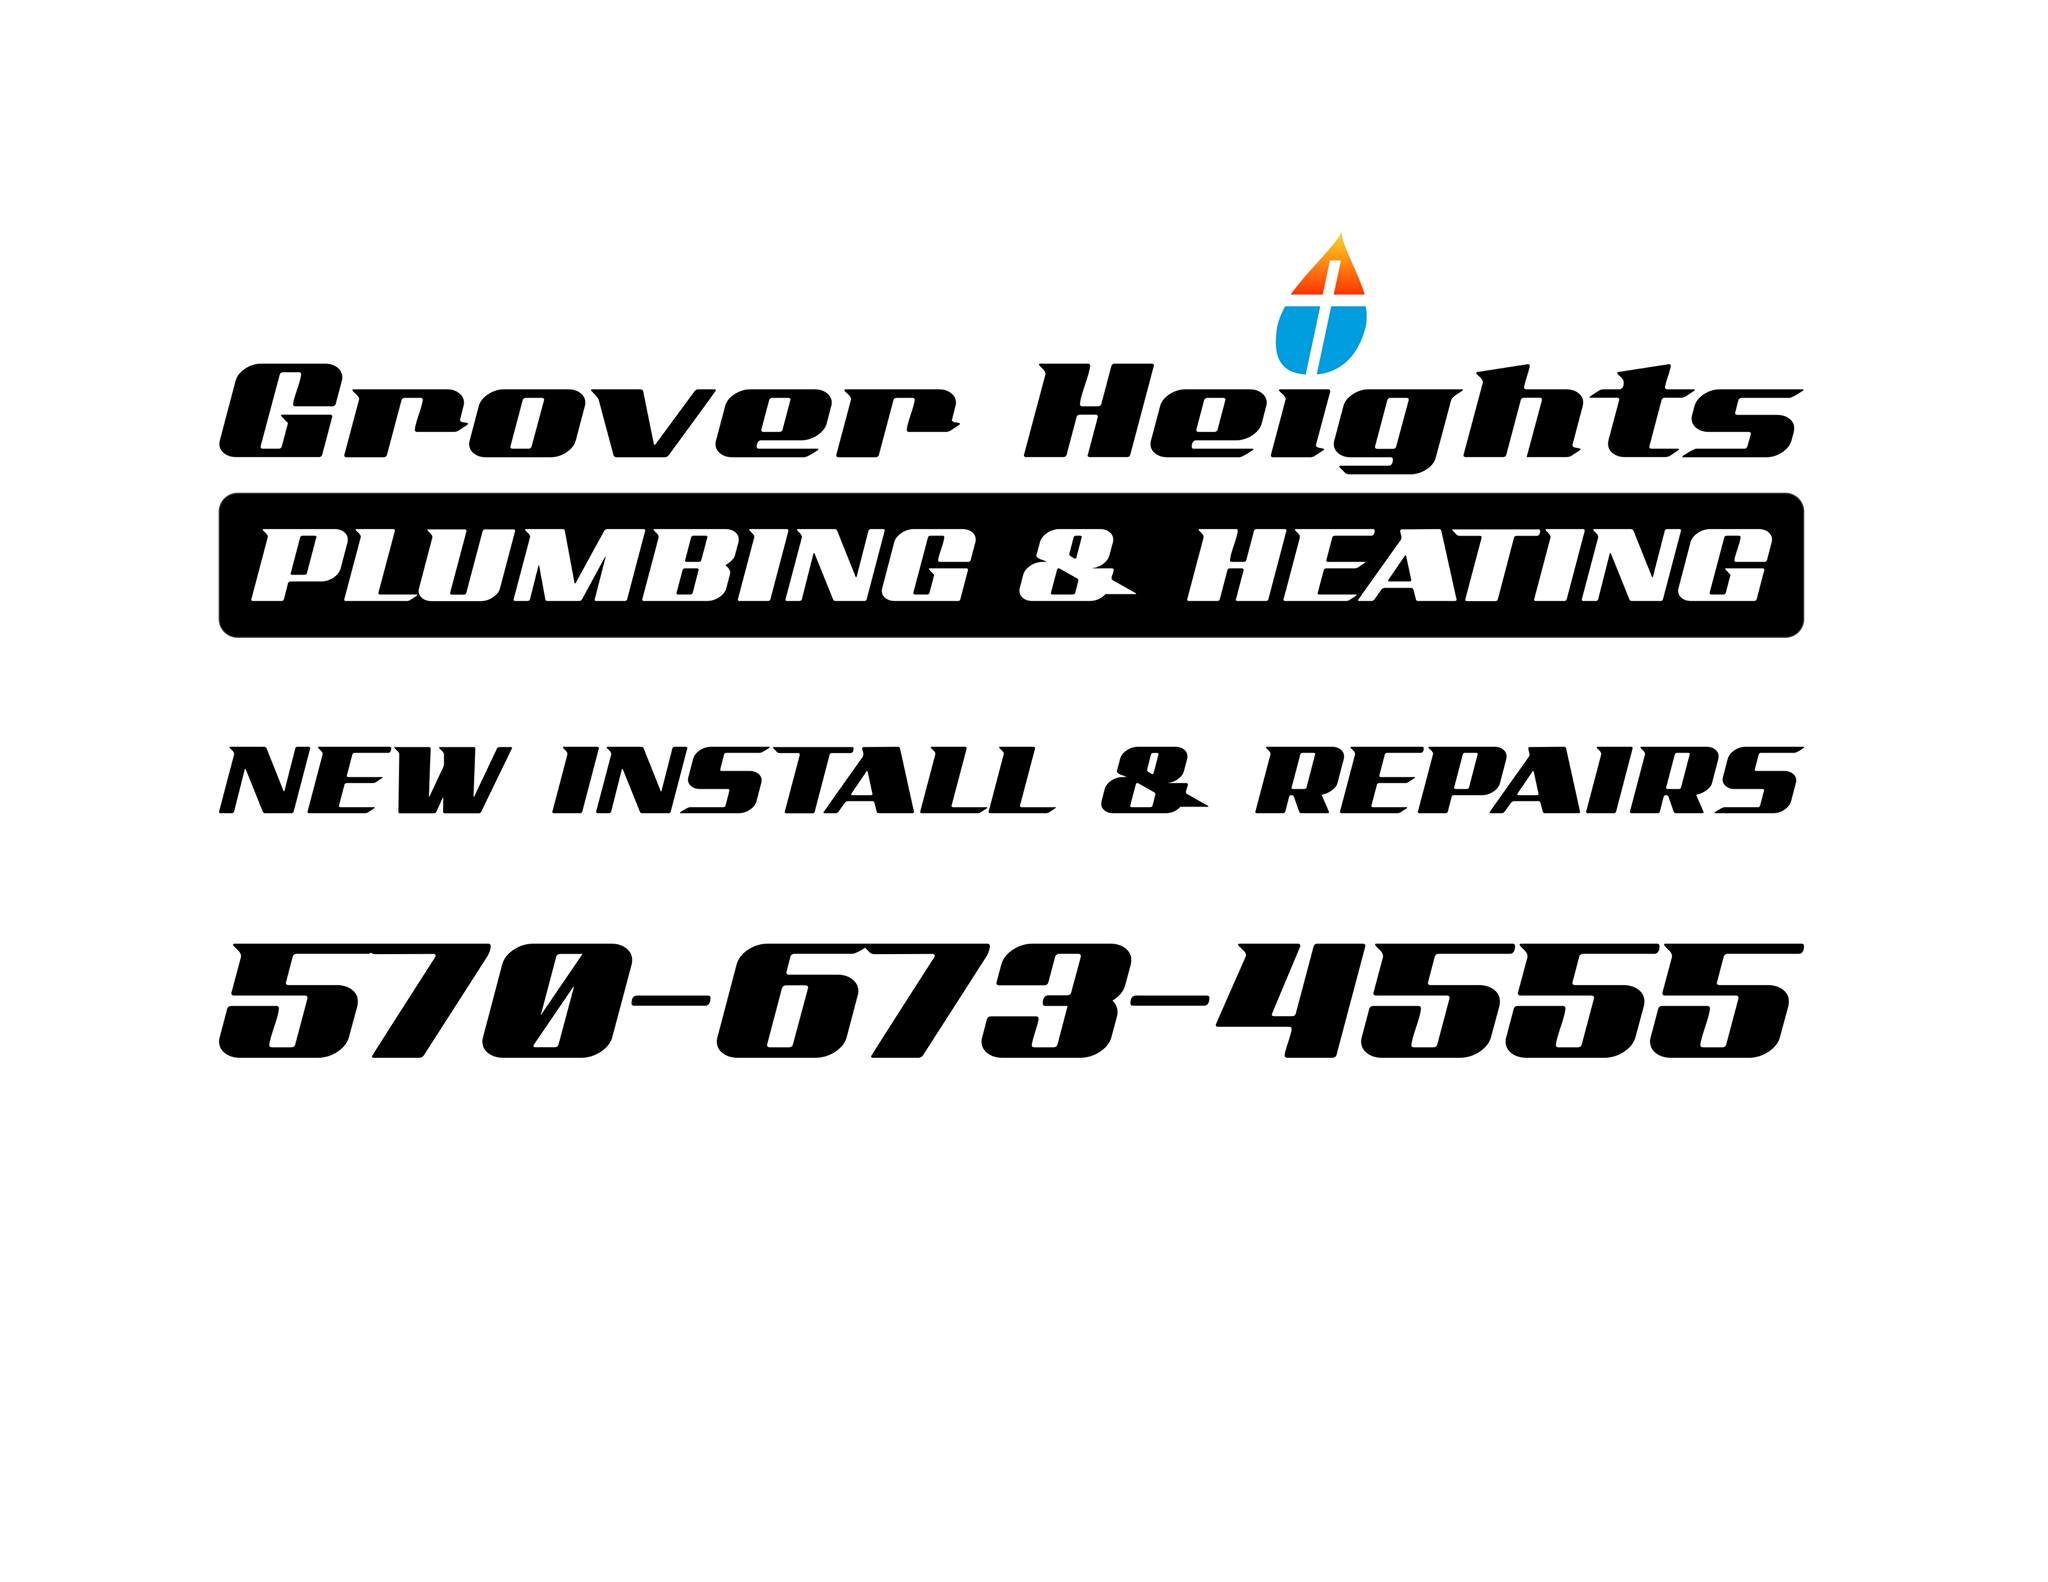 Grover Heights Plumbling & Heating 1107 Grover Rd, Canton Pennsylvania 17724